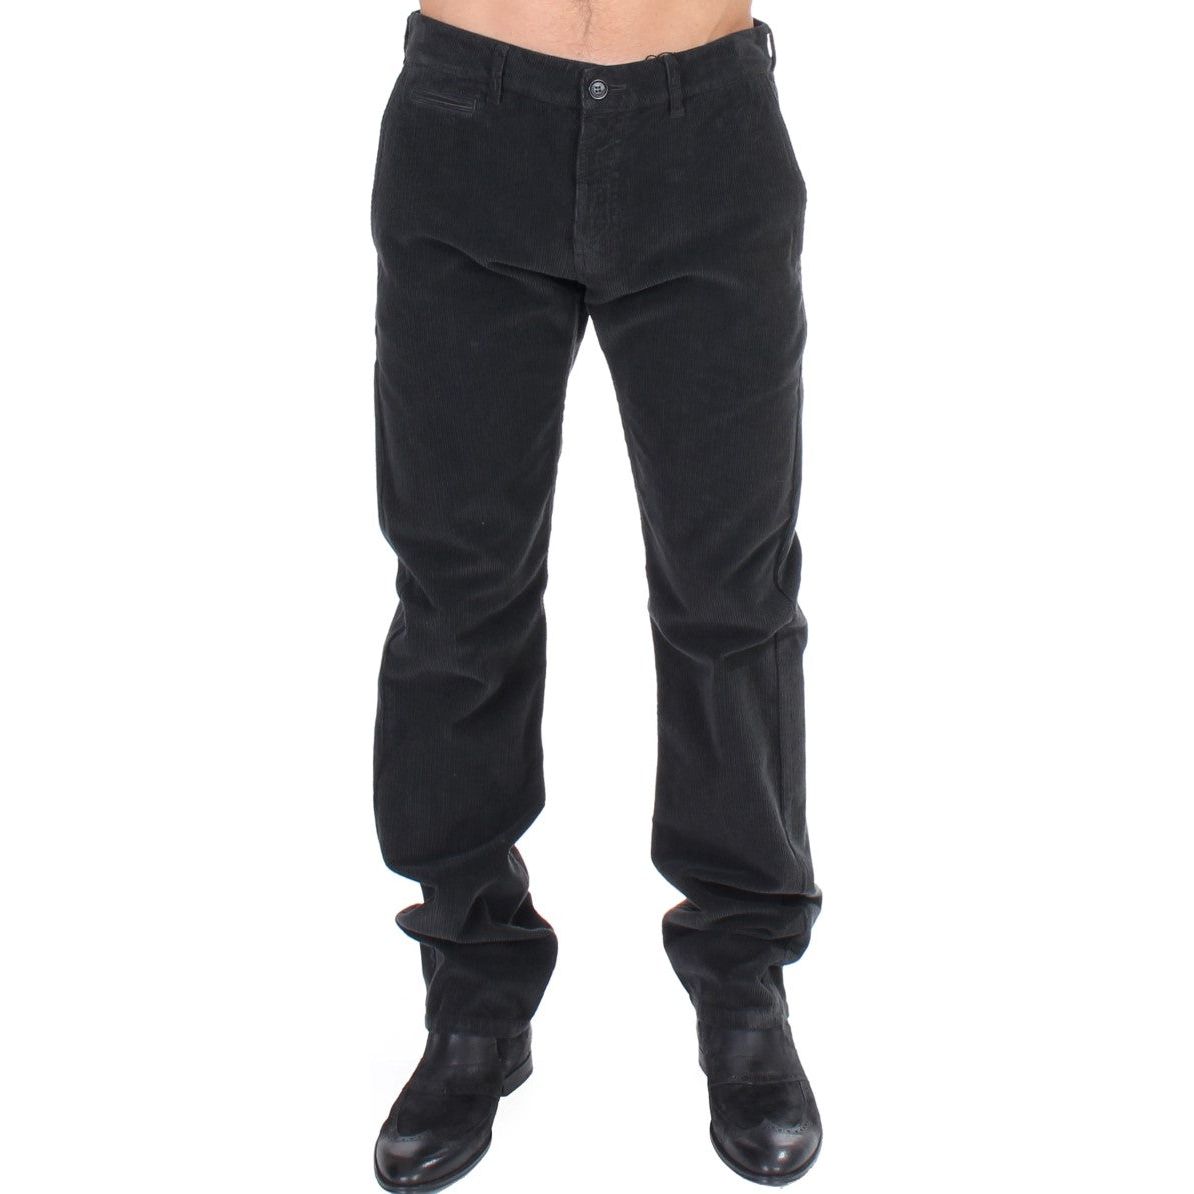 Jeans & Pants Elegant Black Cotton Corduroy Pants GF Ferre